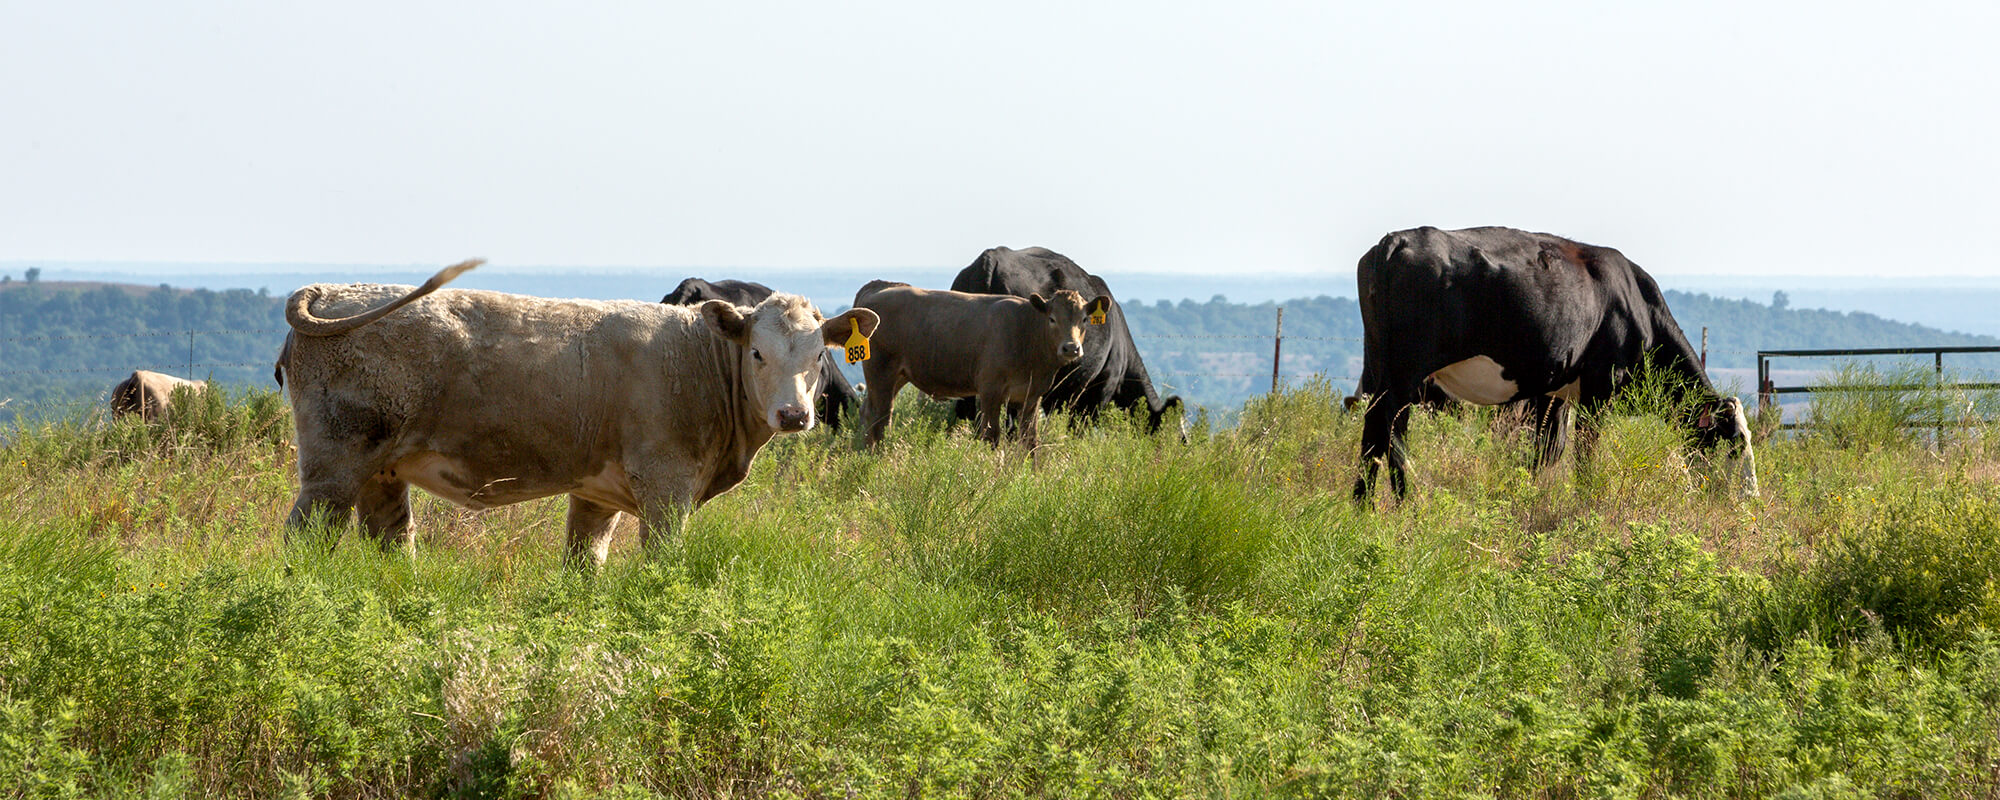 Cattle grazing on a hilltop